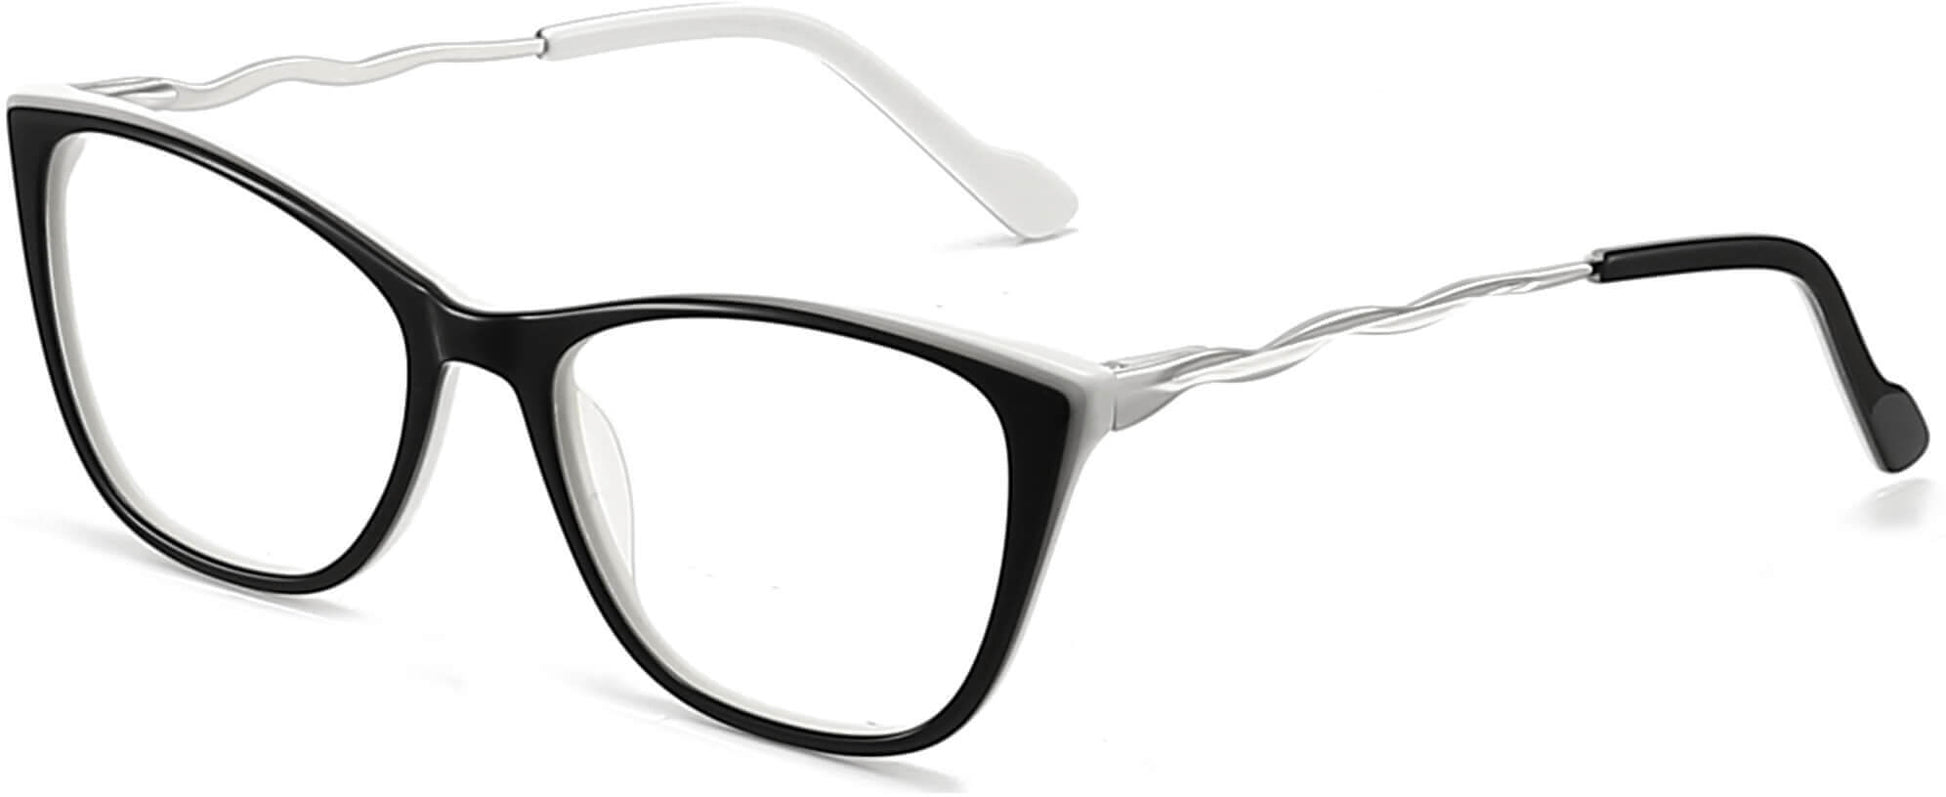 Kira Cateye Black Eyeglasses from ANRRI, angle view